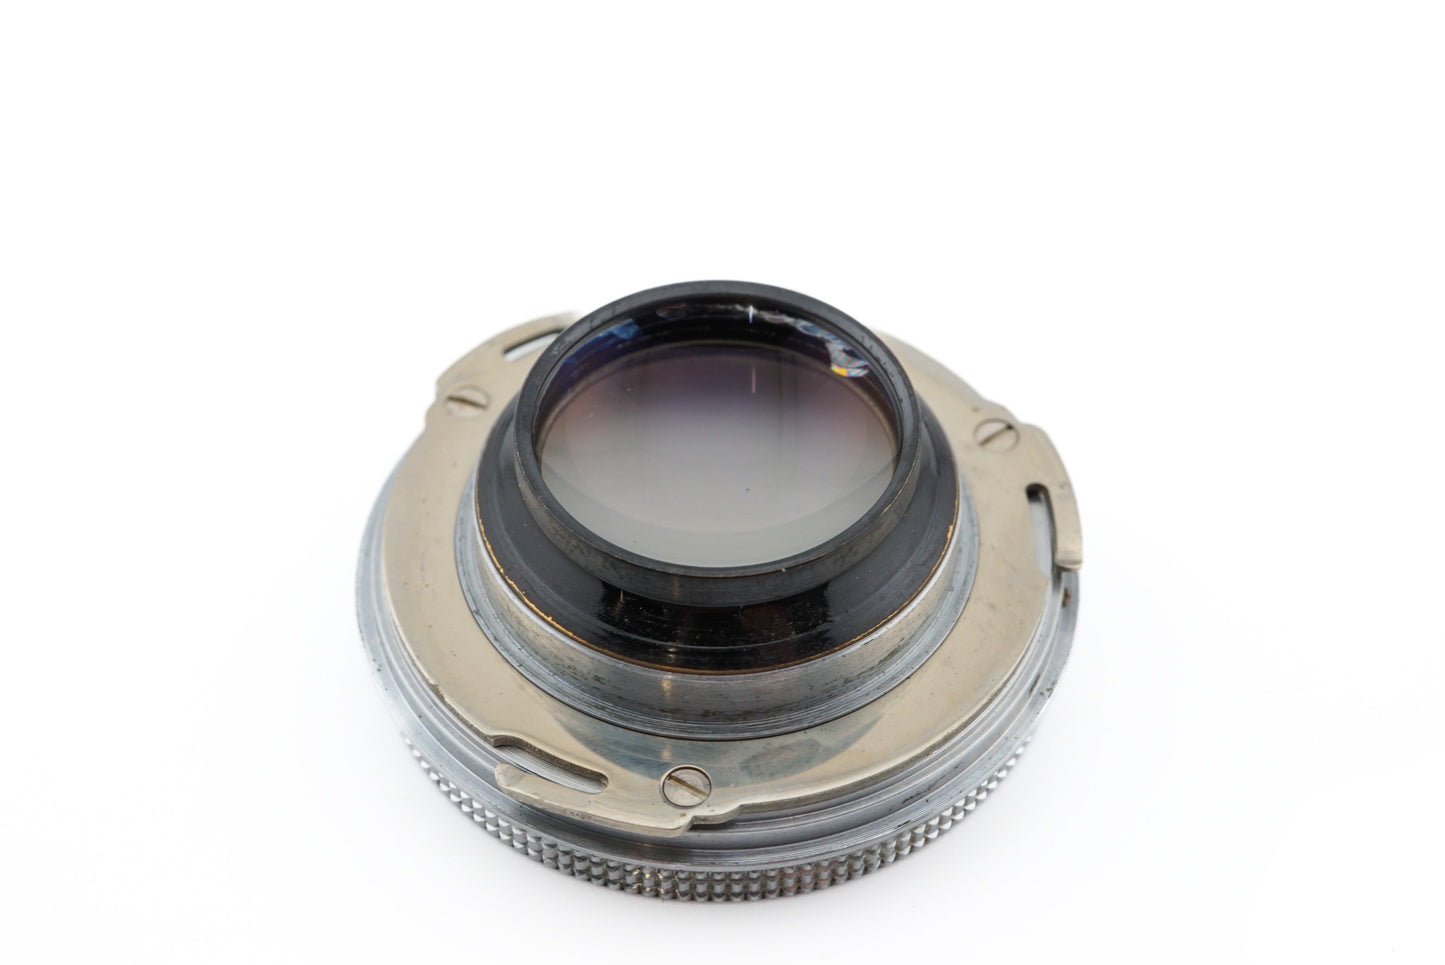 Kodak Retina IIIc (Type 021) + 50mm f2.0 Retina-Xenon C